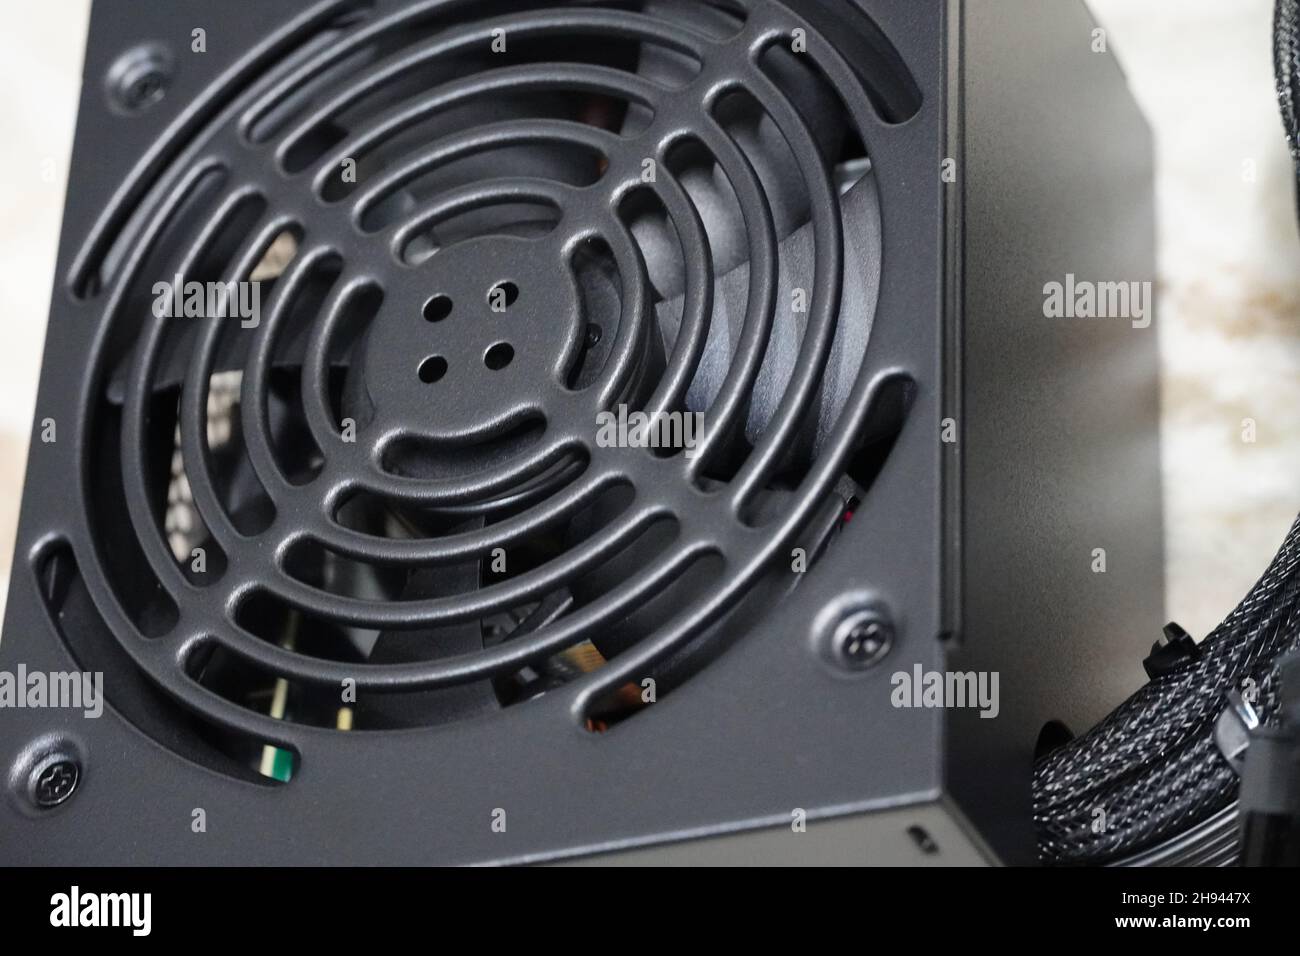 power supply image of a pc closeup fan Stock Photo